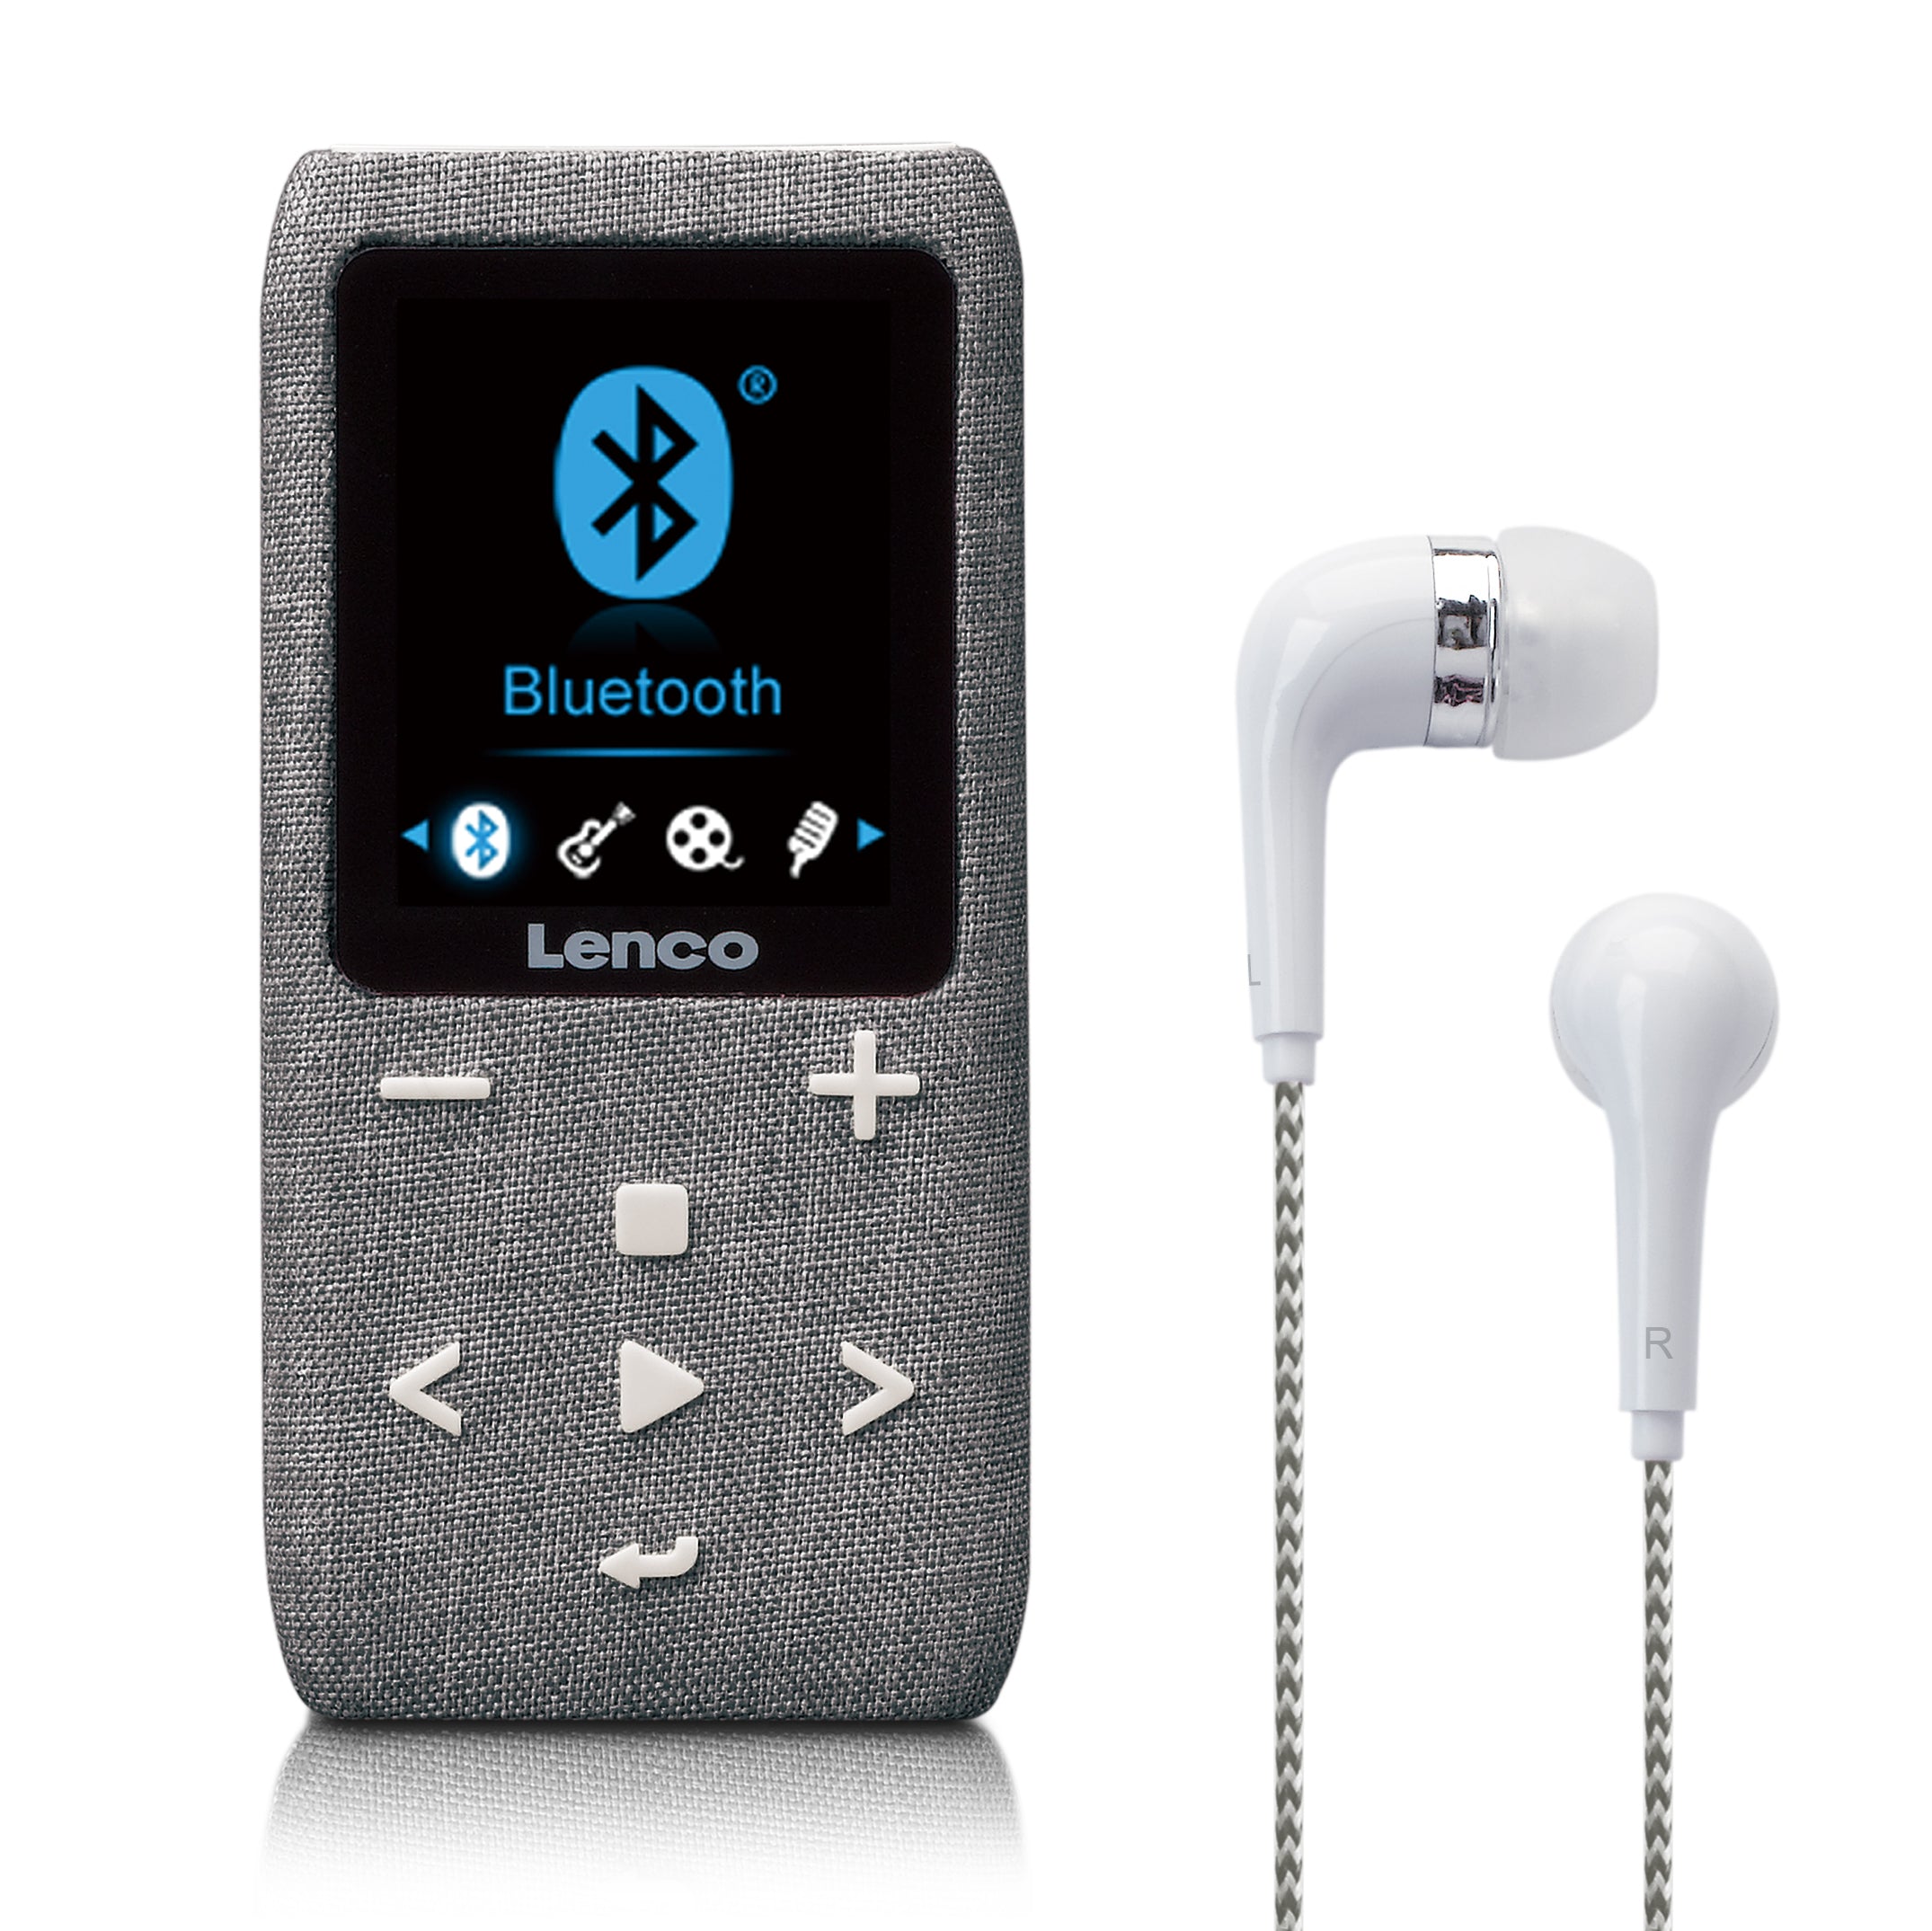 8GB SD MP3/MP4 Xemio-861GY Bluetooth® Card - - Micro Player LENCO Grey with